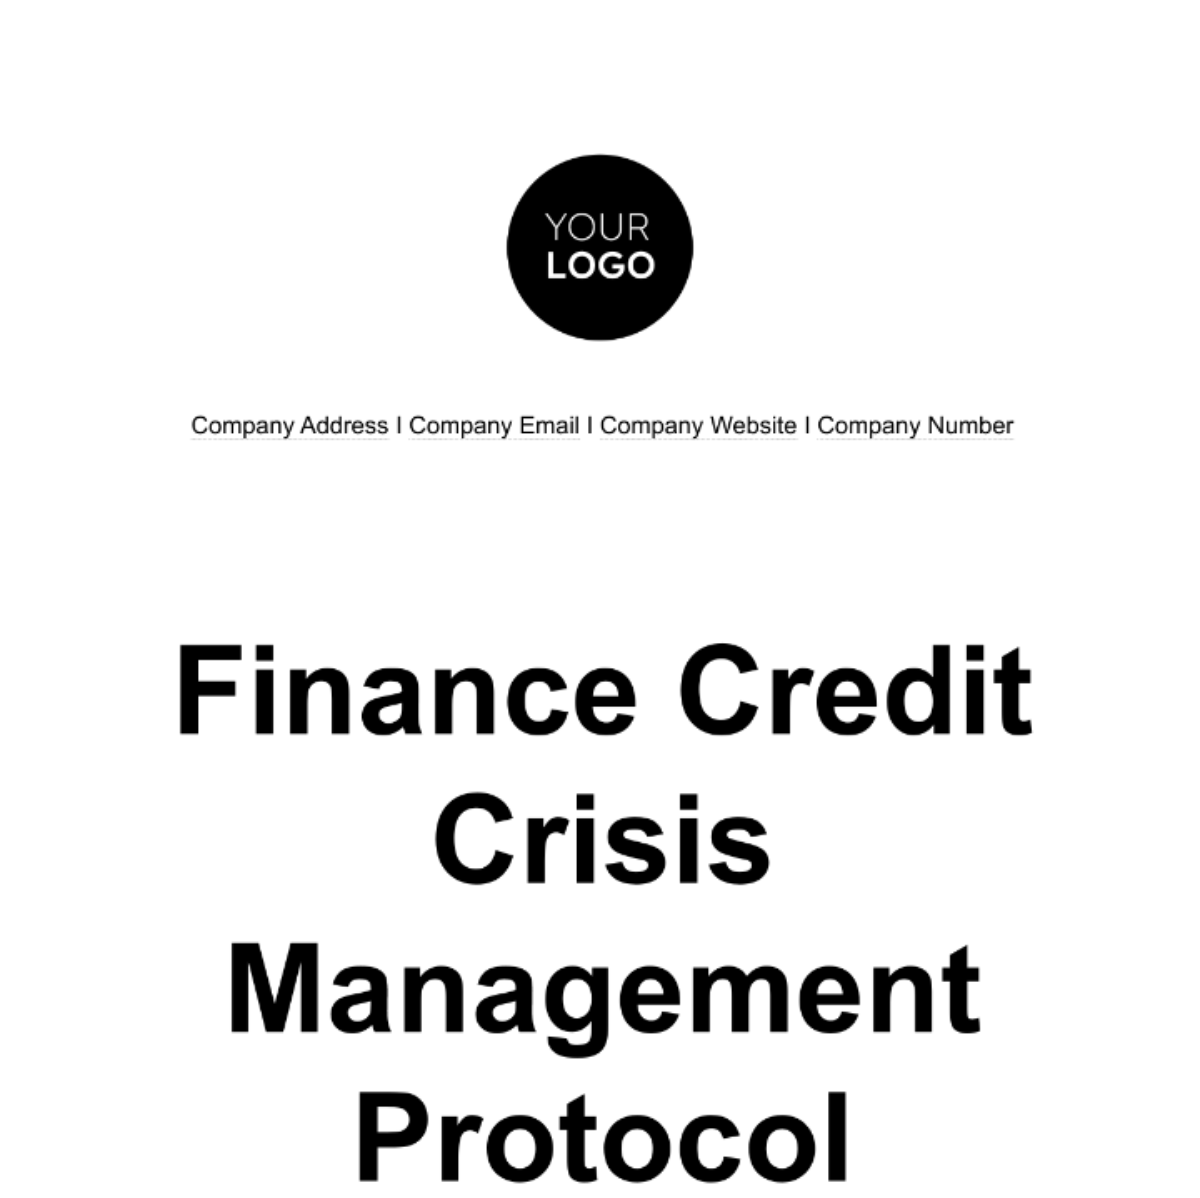 Finance Credit Crisis Management Protocol Template